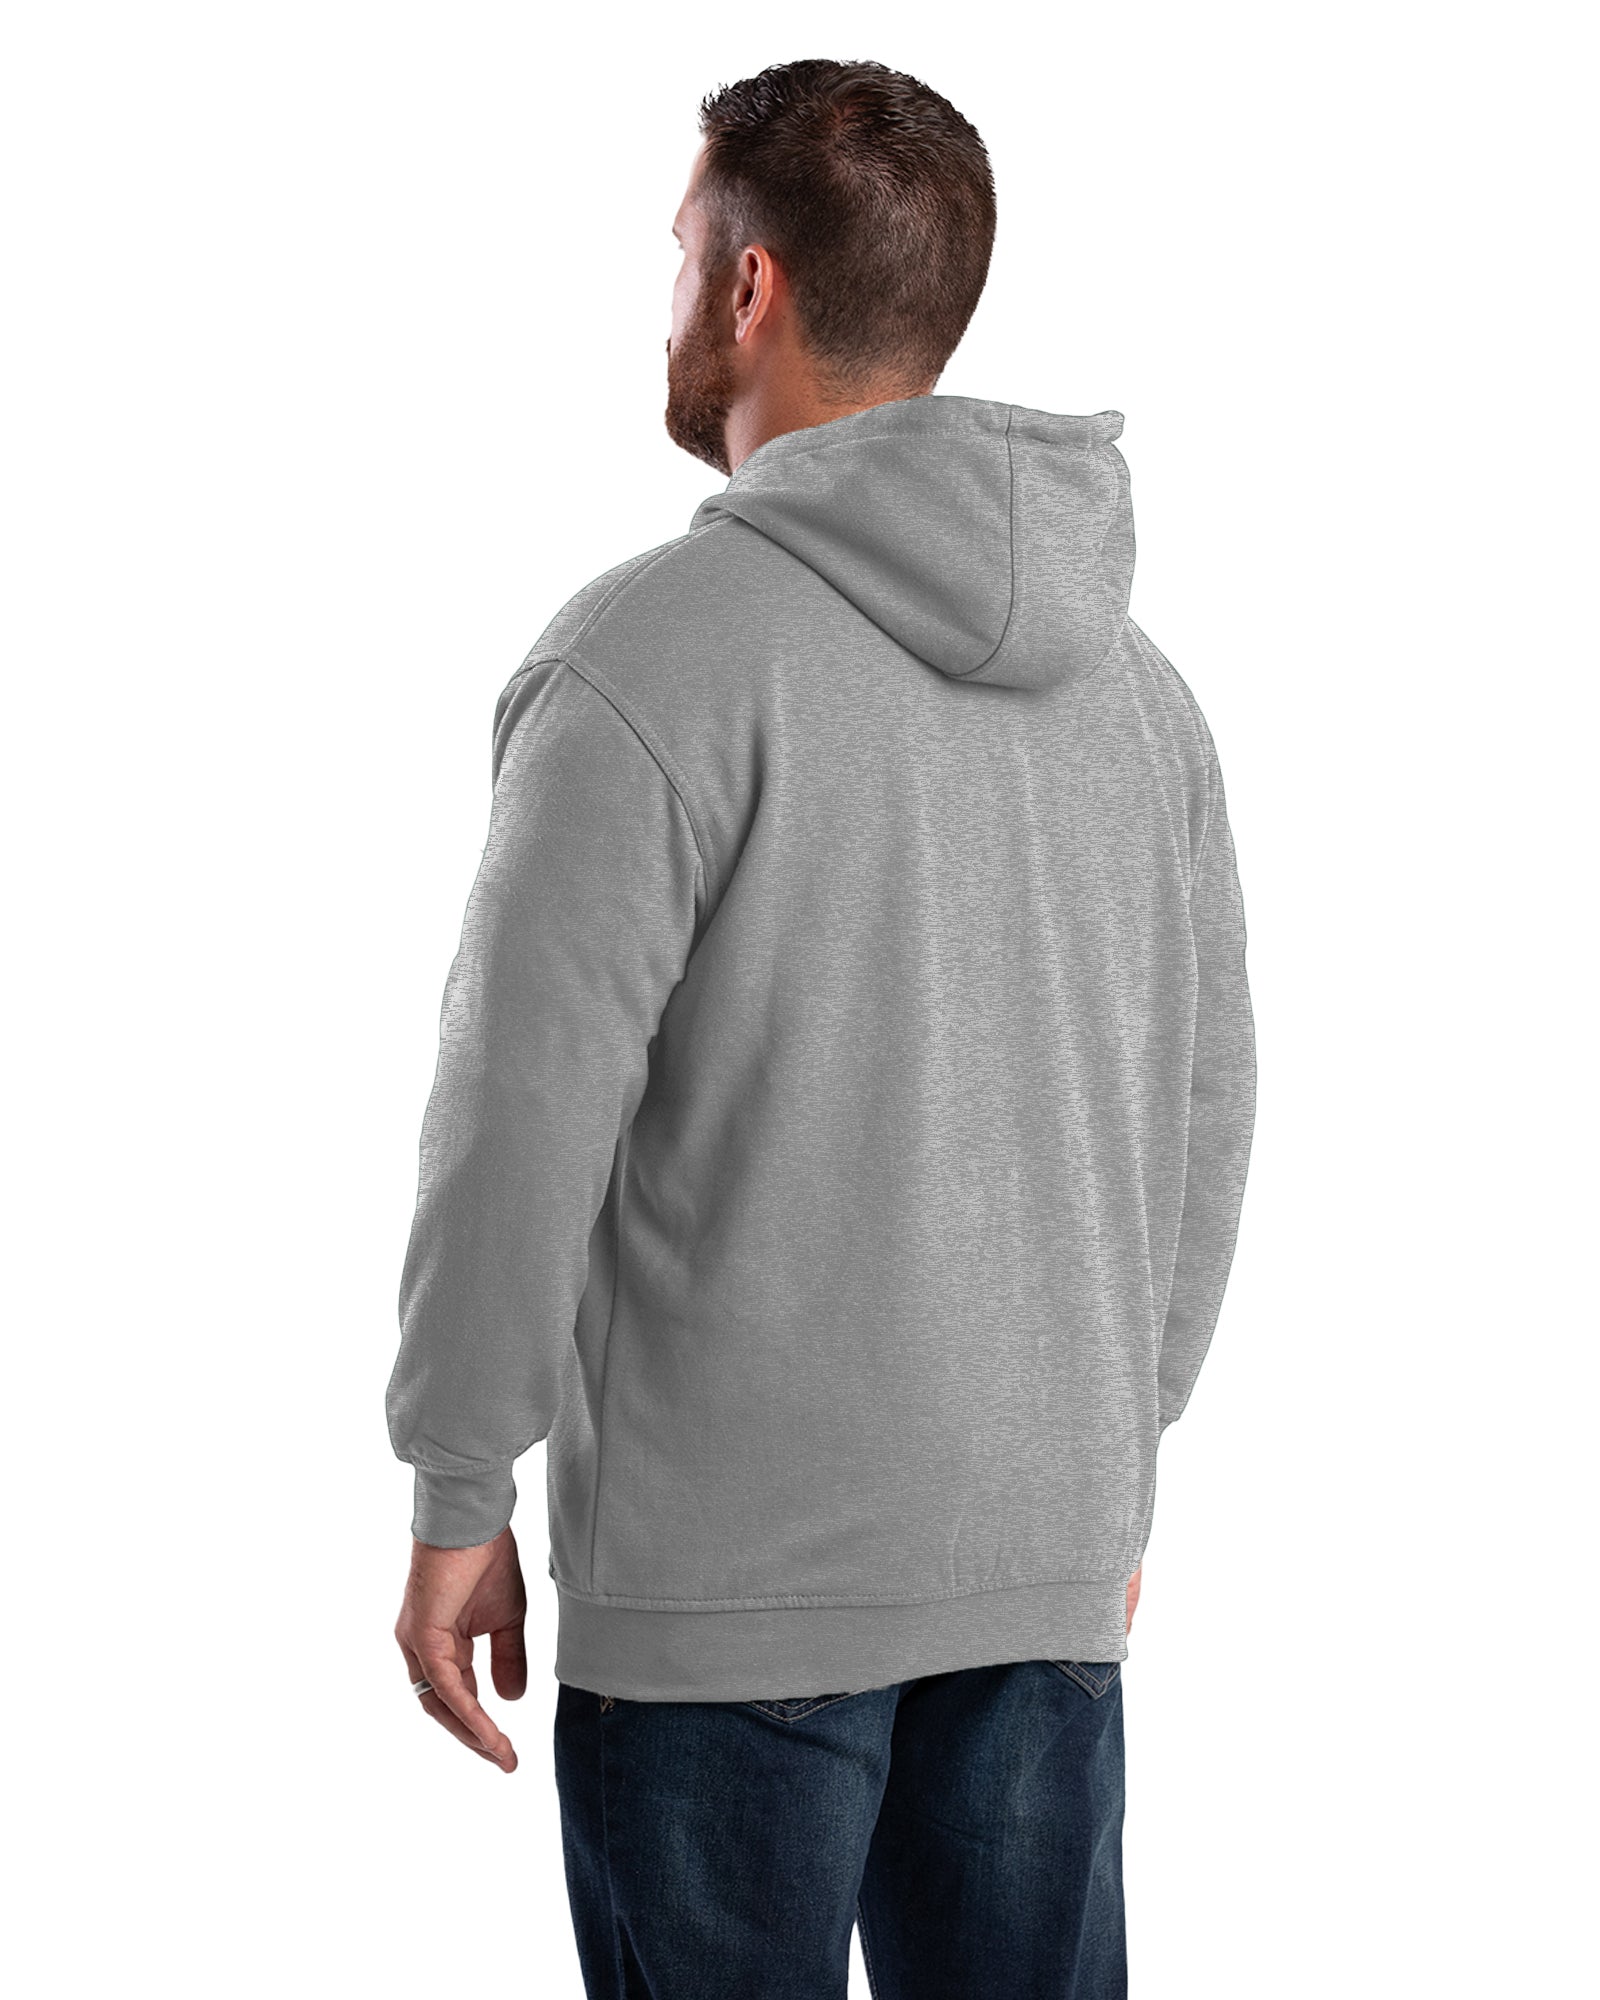 SZ102GY Heritage Thermal-Lined Full-Zip Hooded Sweatshirt